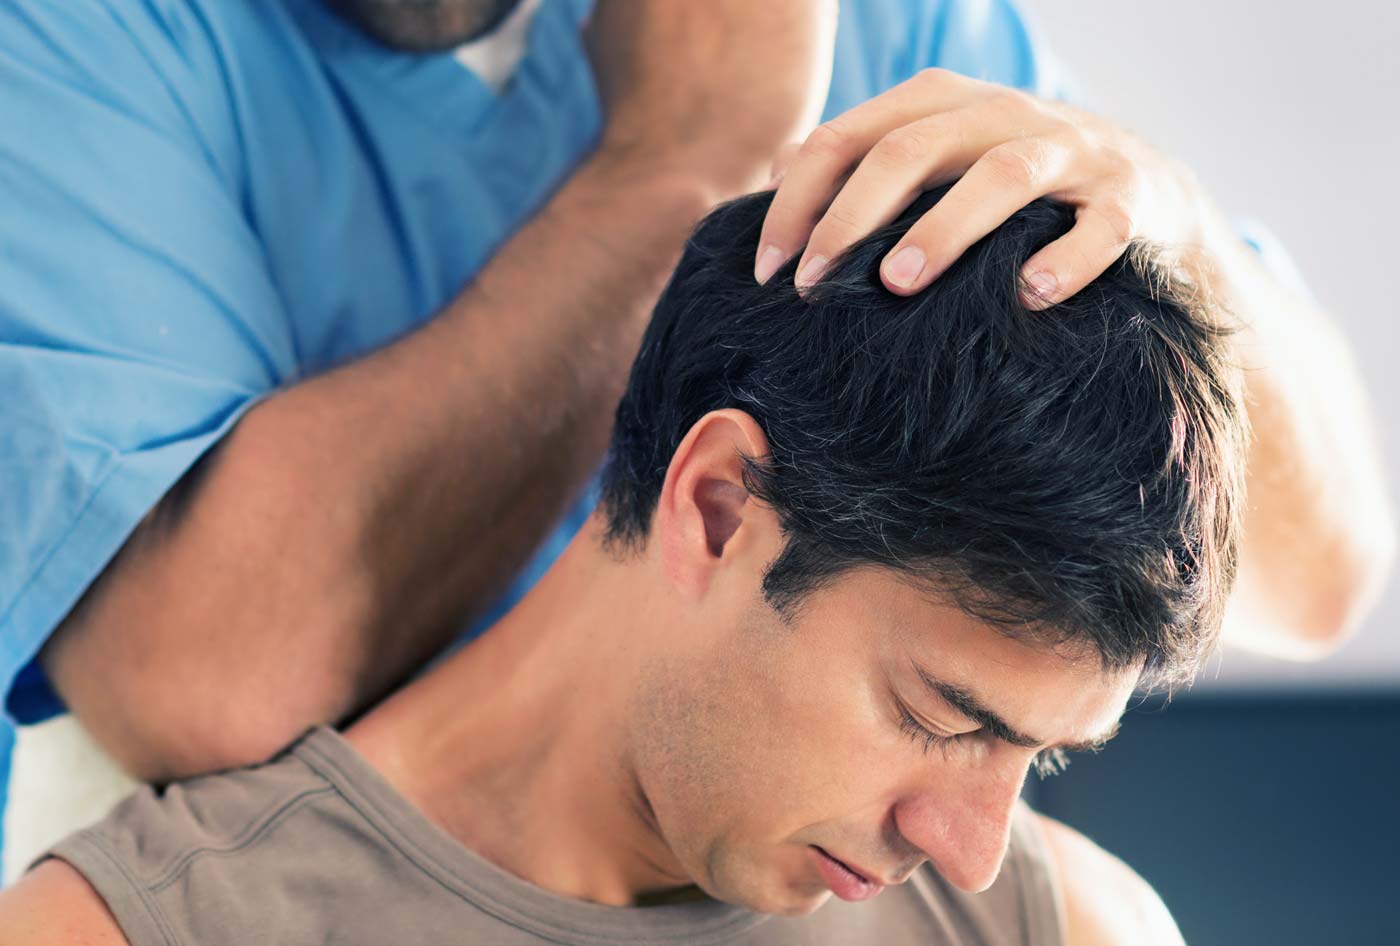 When a guy massages your shoulders